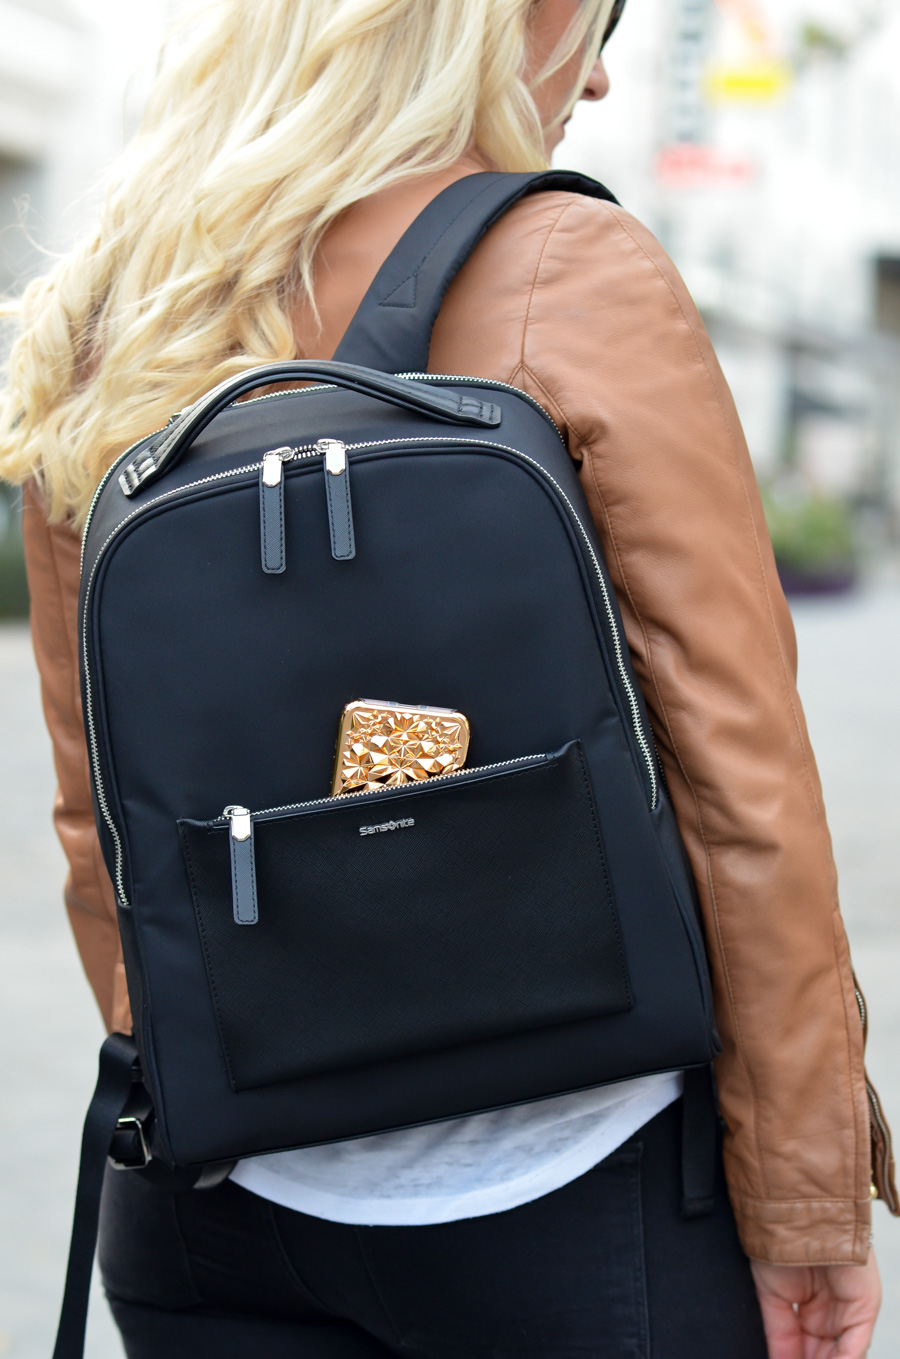 Best Travel Bags for Stylish Women. Chic Work Laptop Backpack - Samsonite Zalia Backpack Review